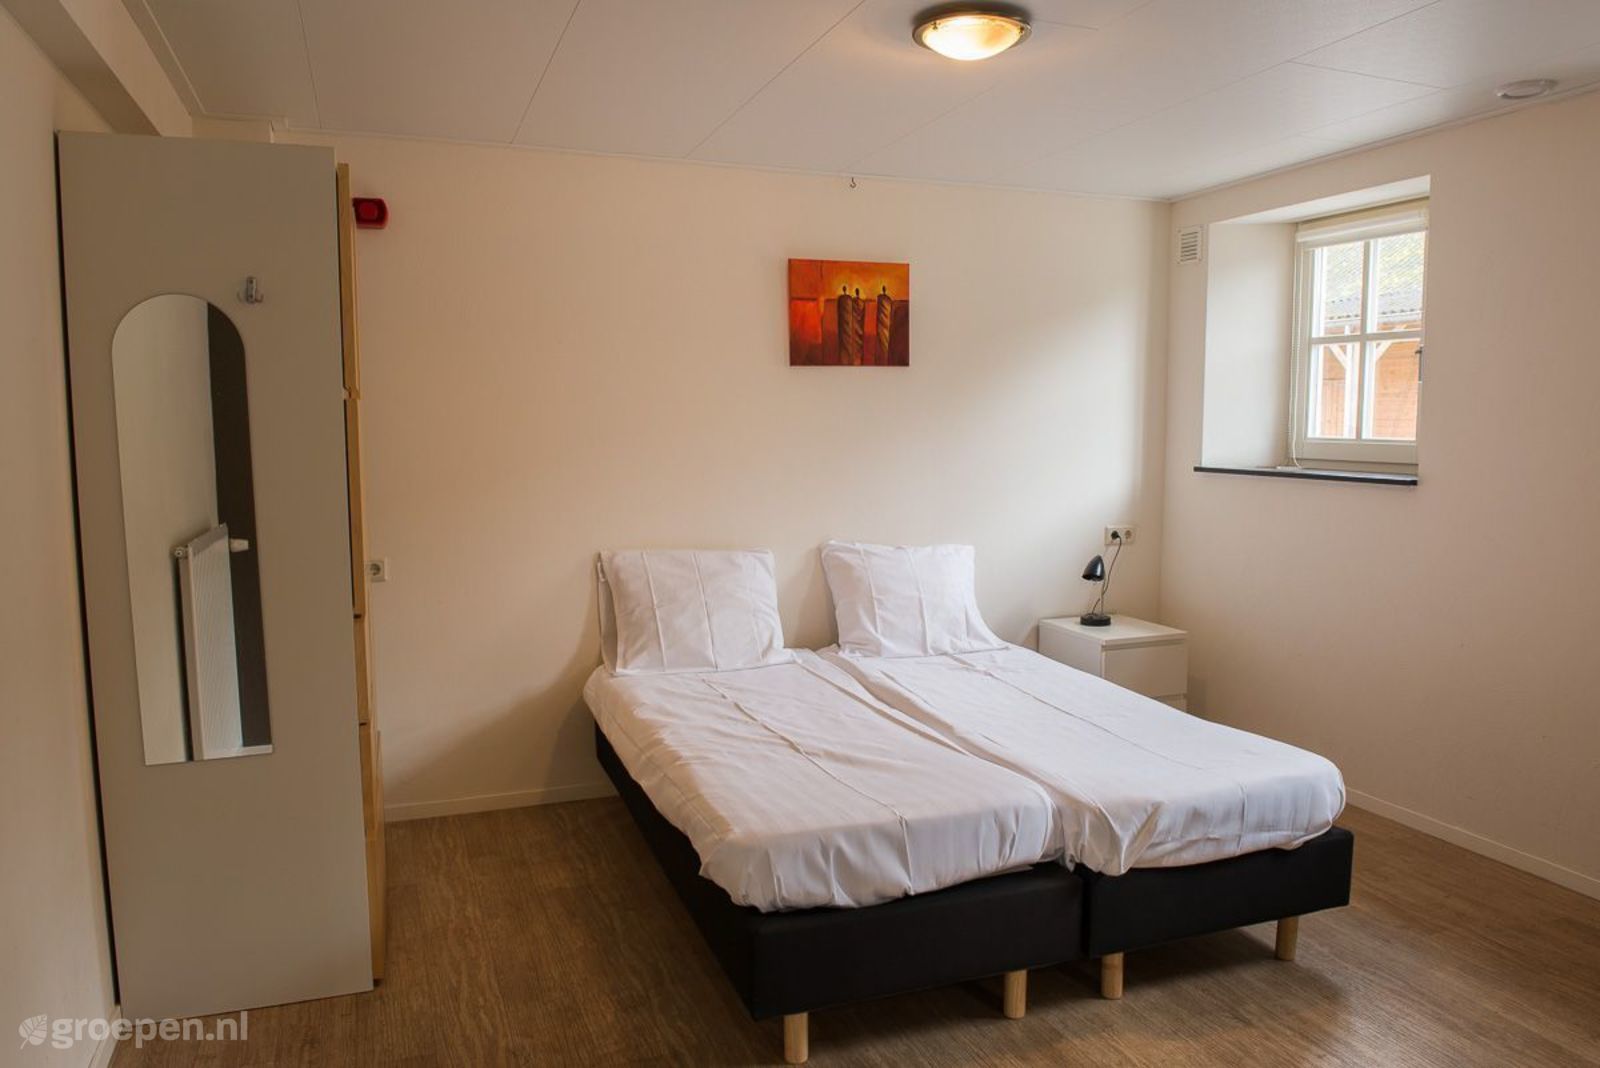 Group accommodation Geijsteren